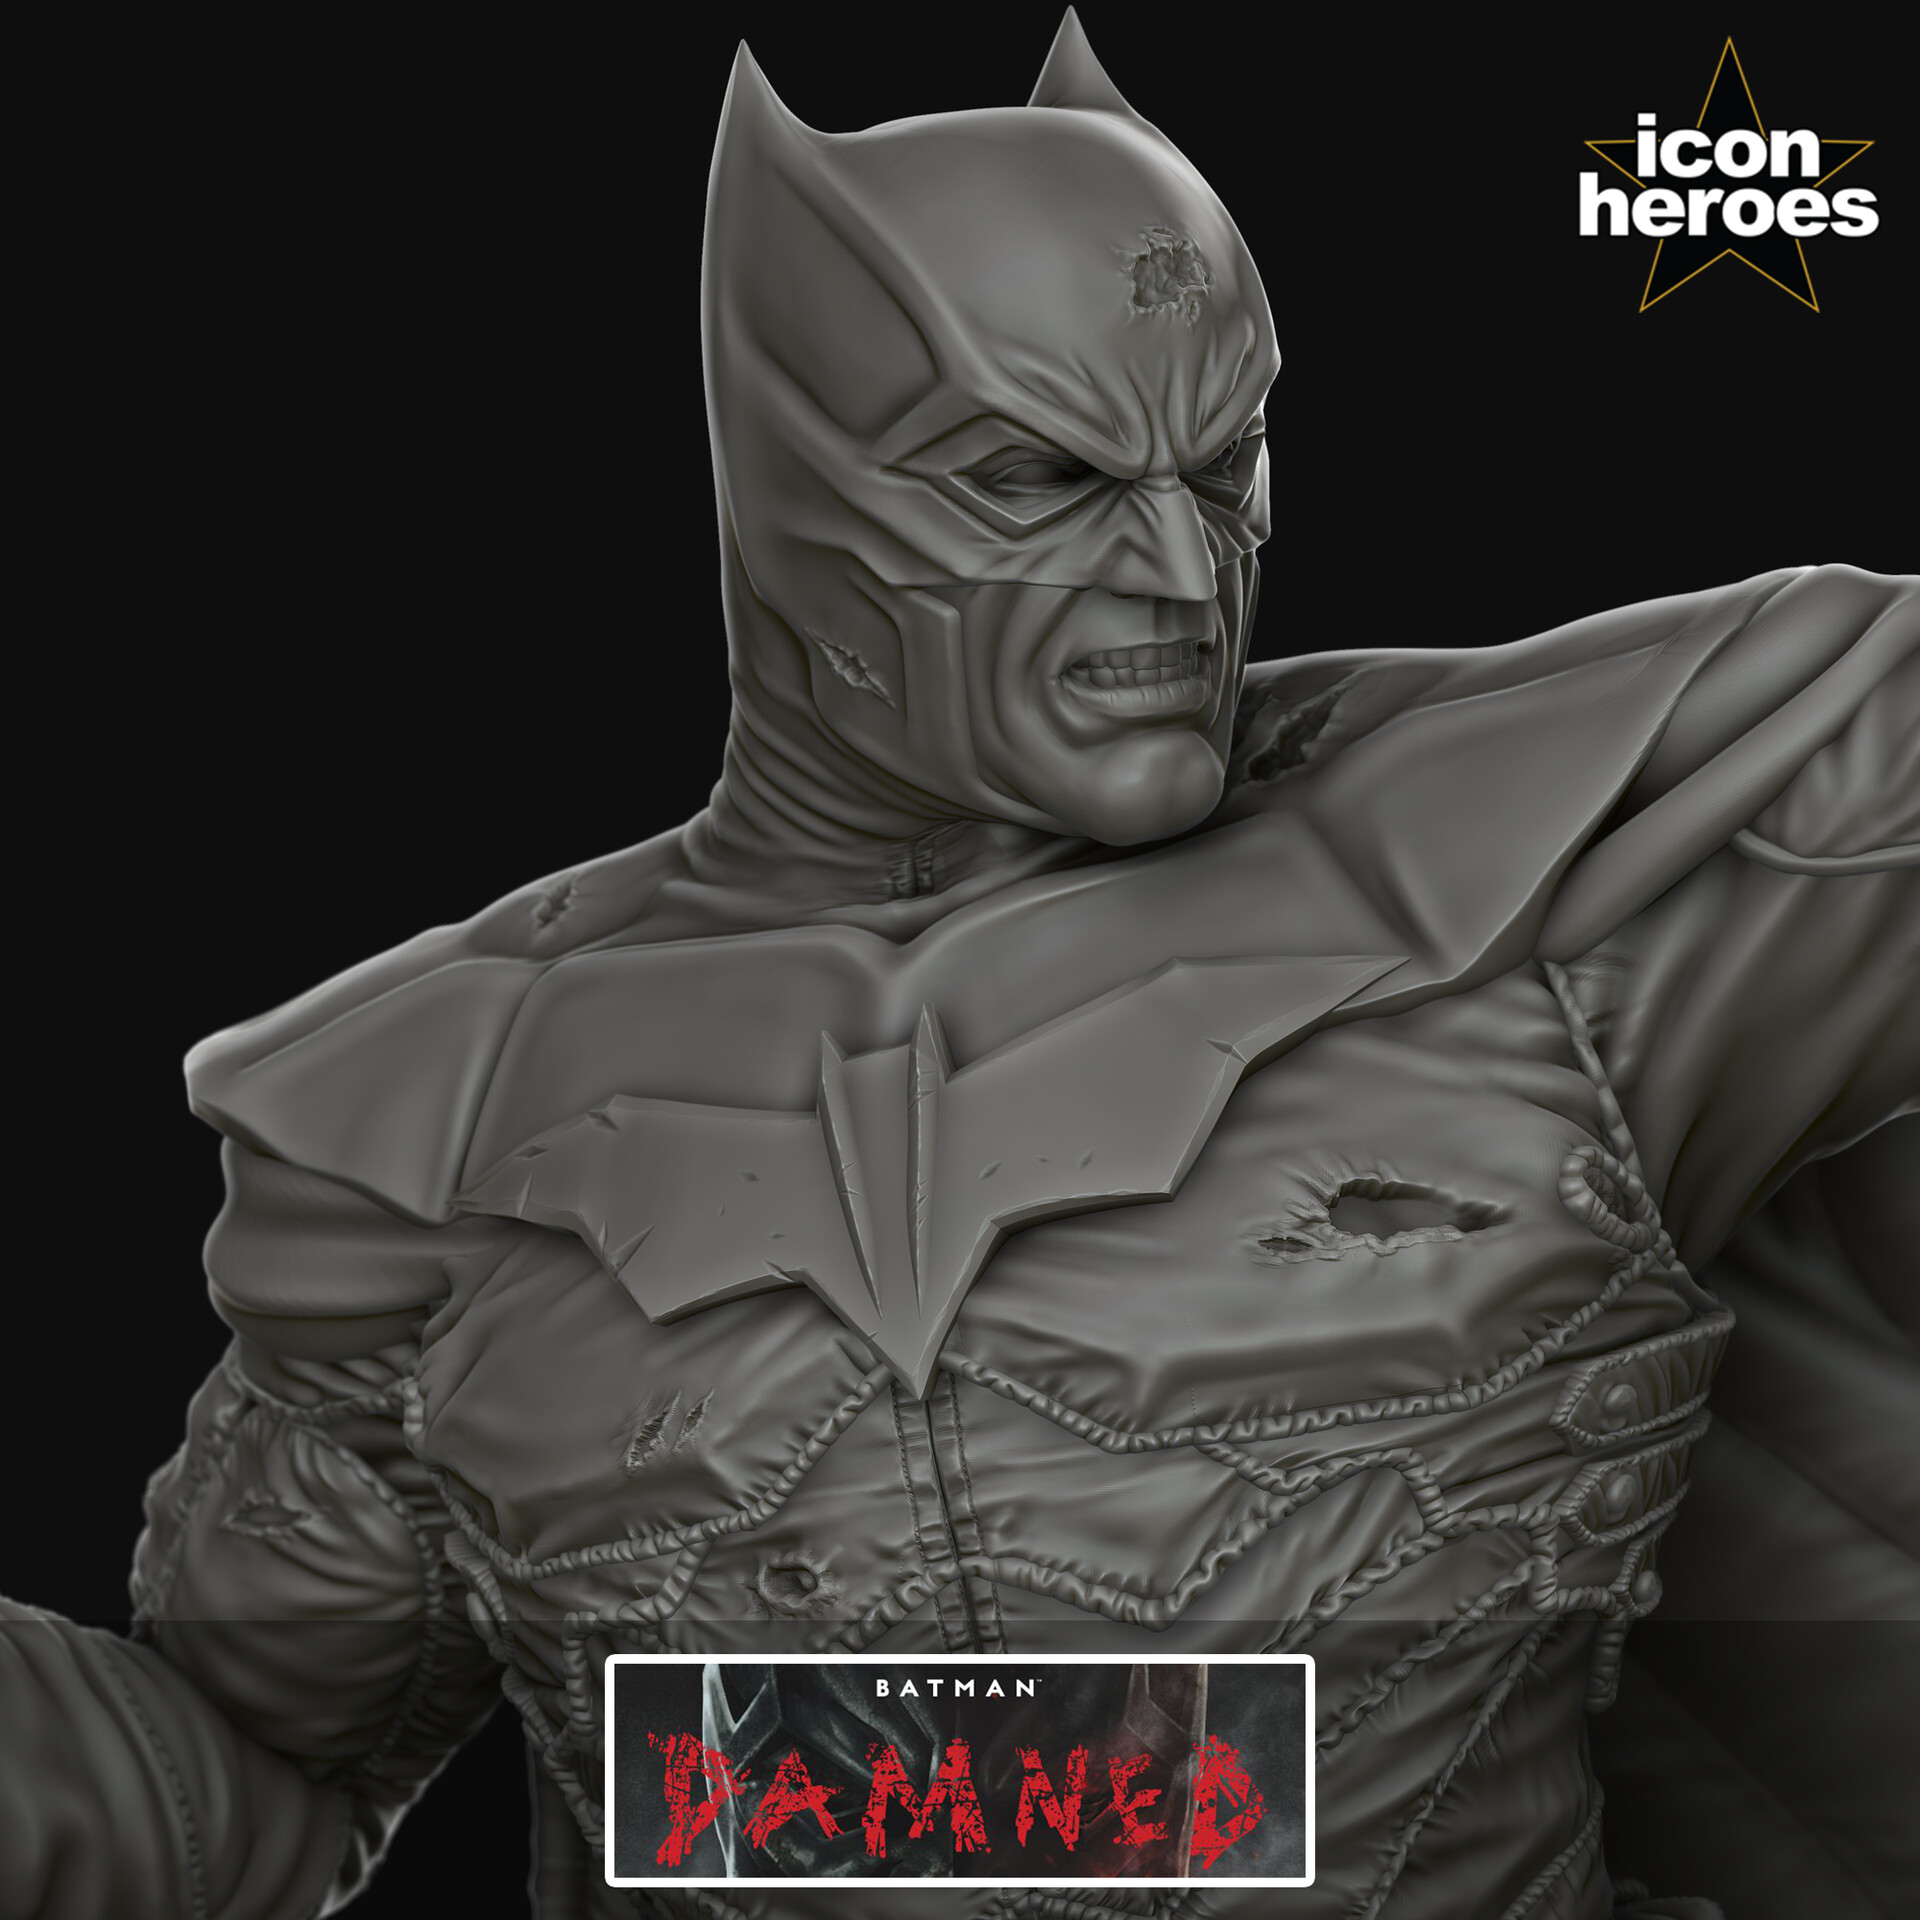 Details about   DC COMICS BATMAN DAMNED PREVIEWS SDCC 2019 EXCLUSIVE ICON HEROS